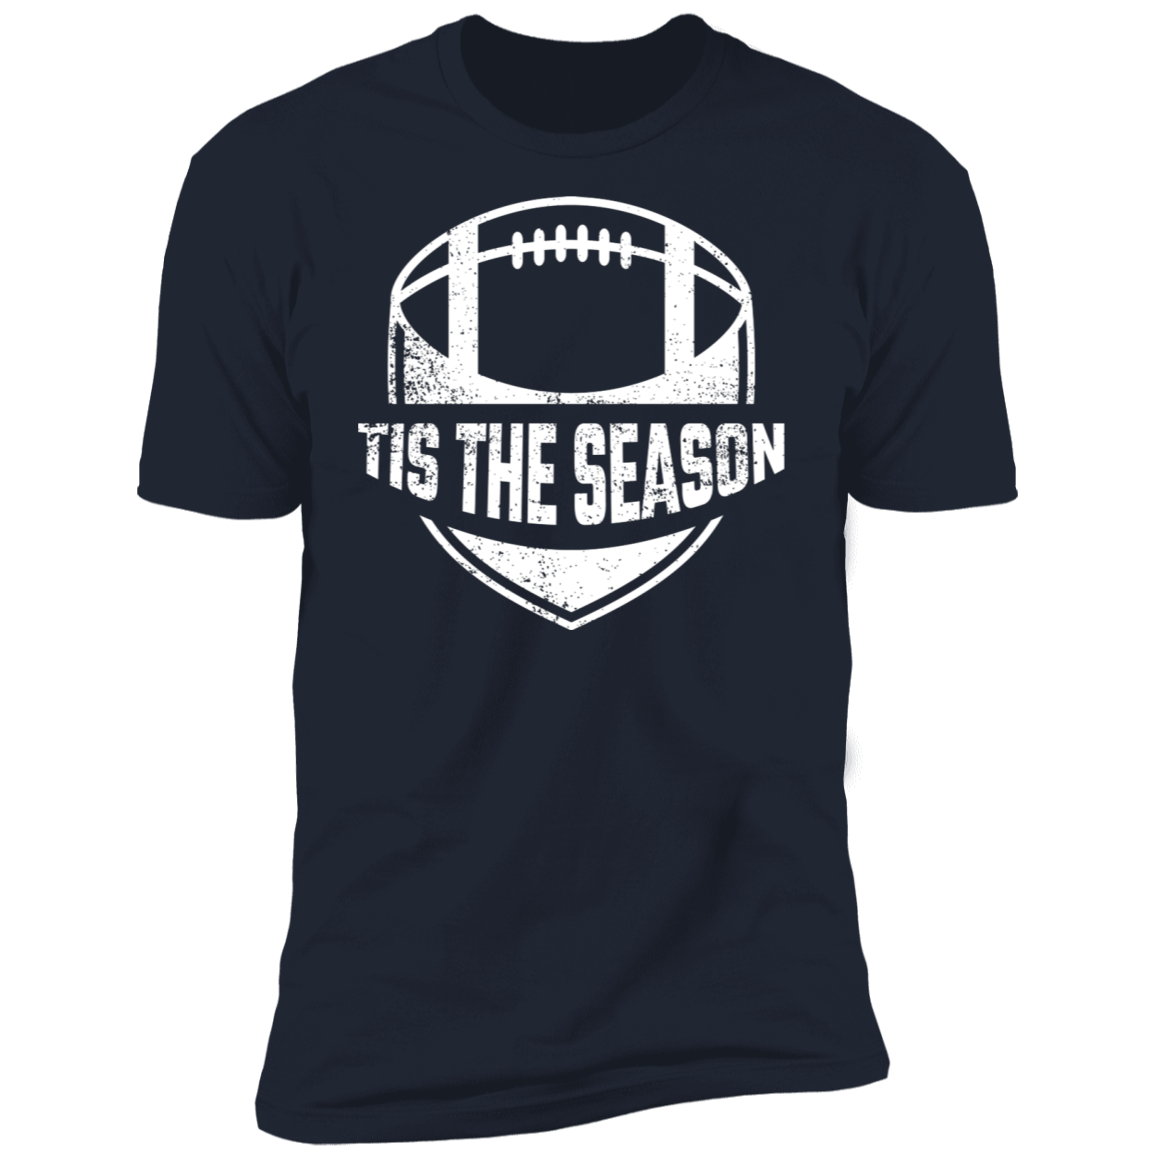 Tis The Season Football T-Shirt Apparel - The Beer Lodge